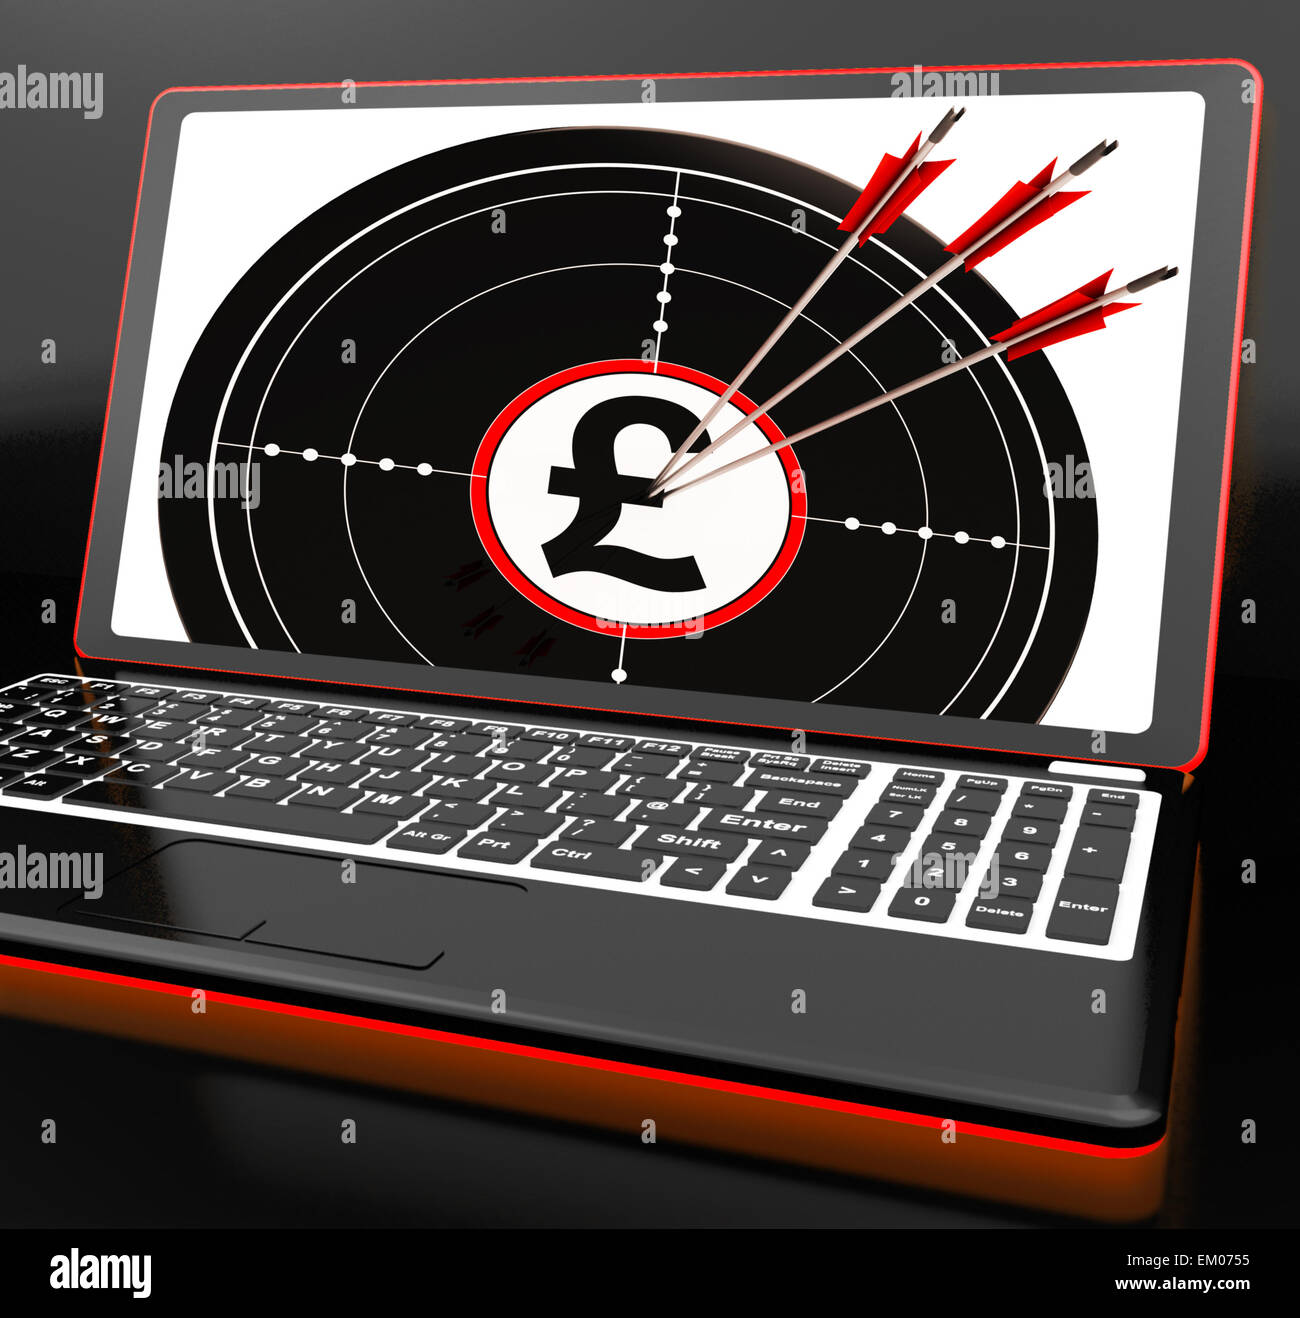 Pound Symbol On Laptop Shows Britain Finances Stock Photo